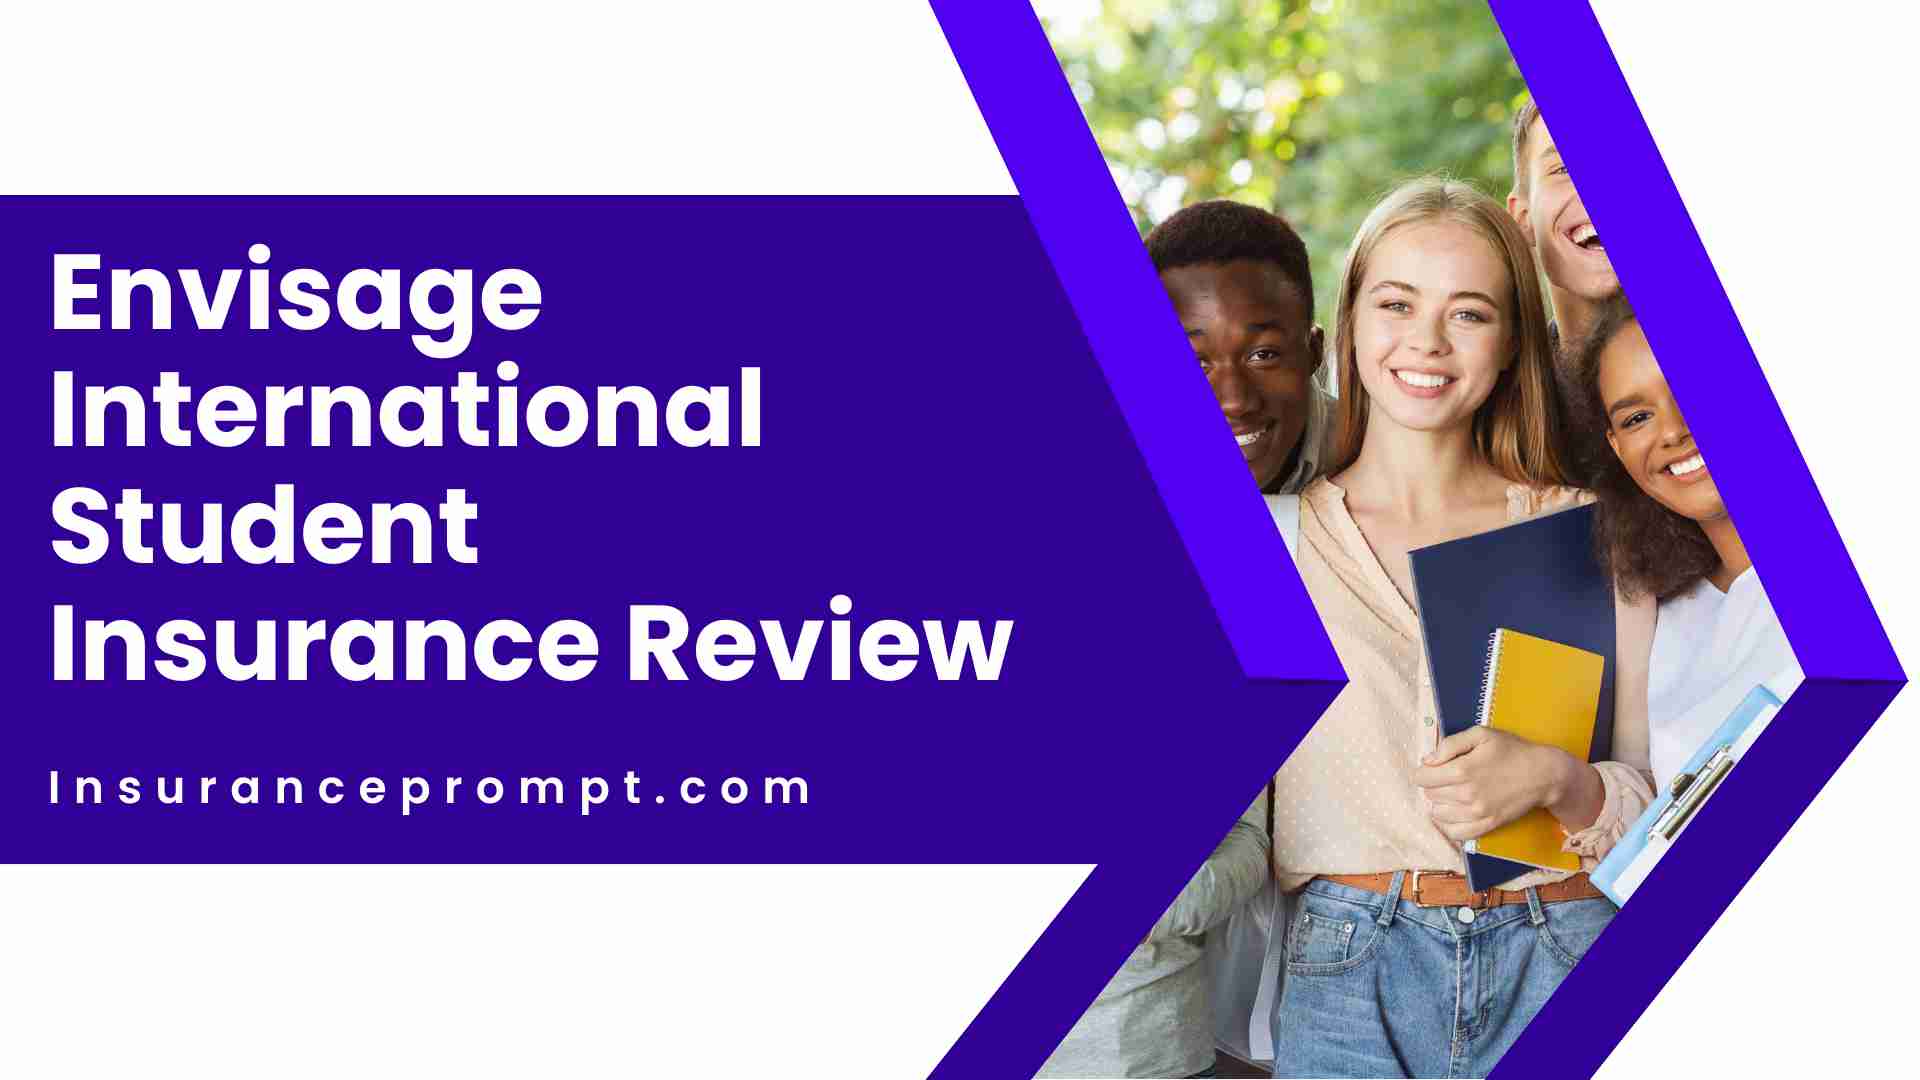 Envisage International Student Insurance Review